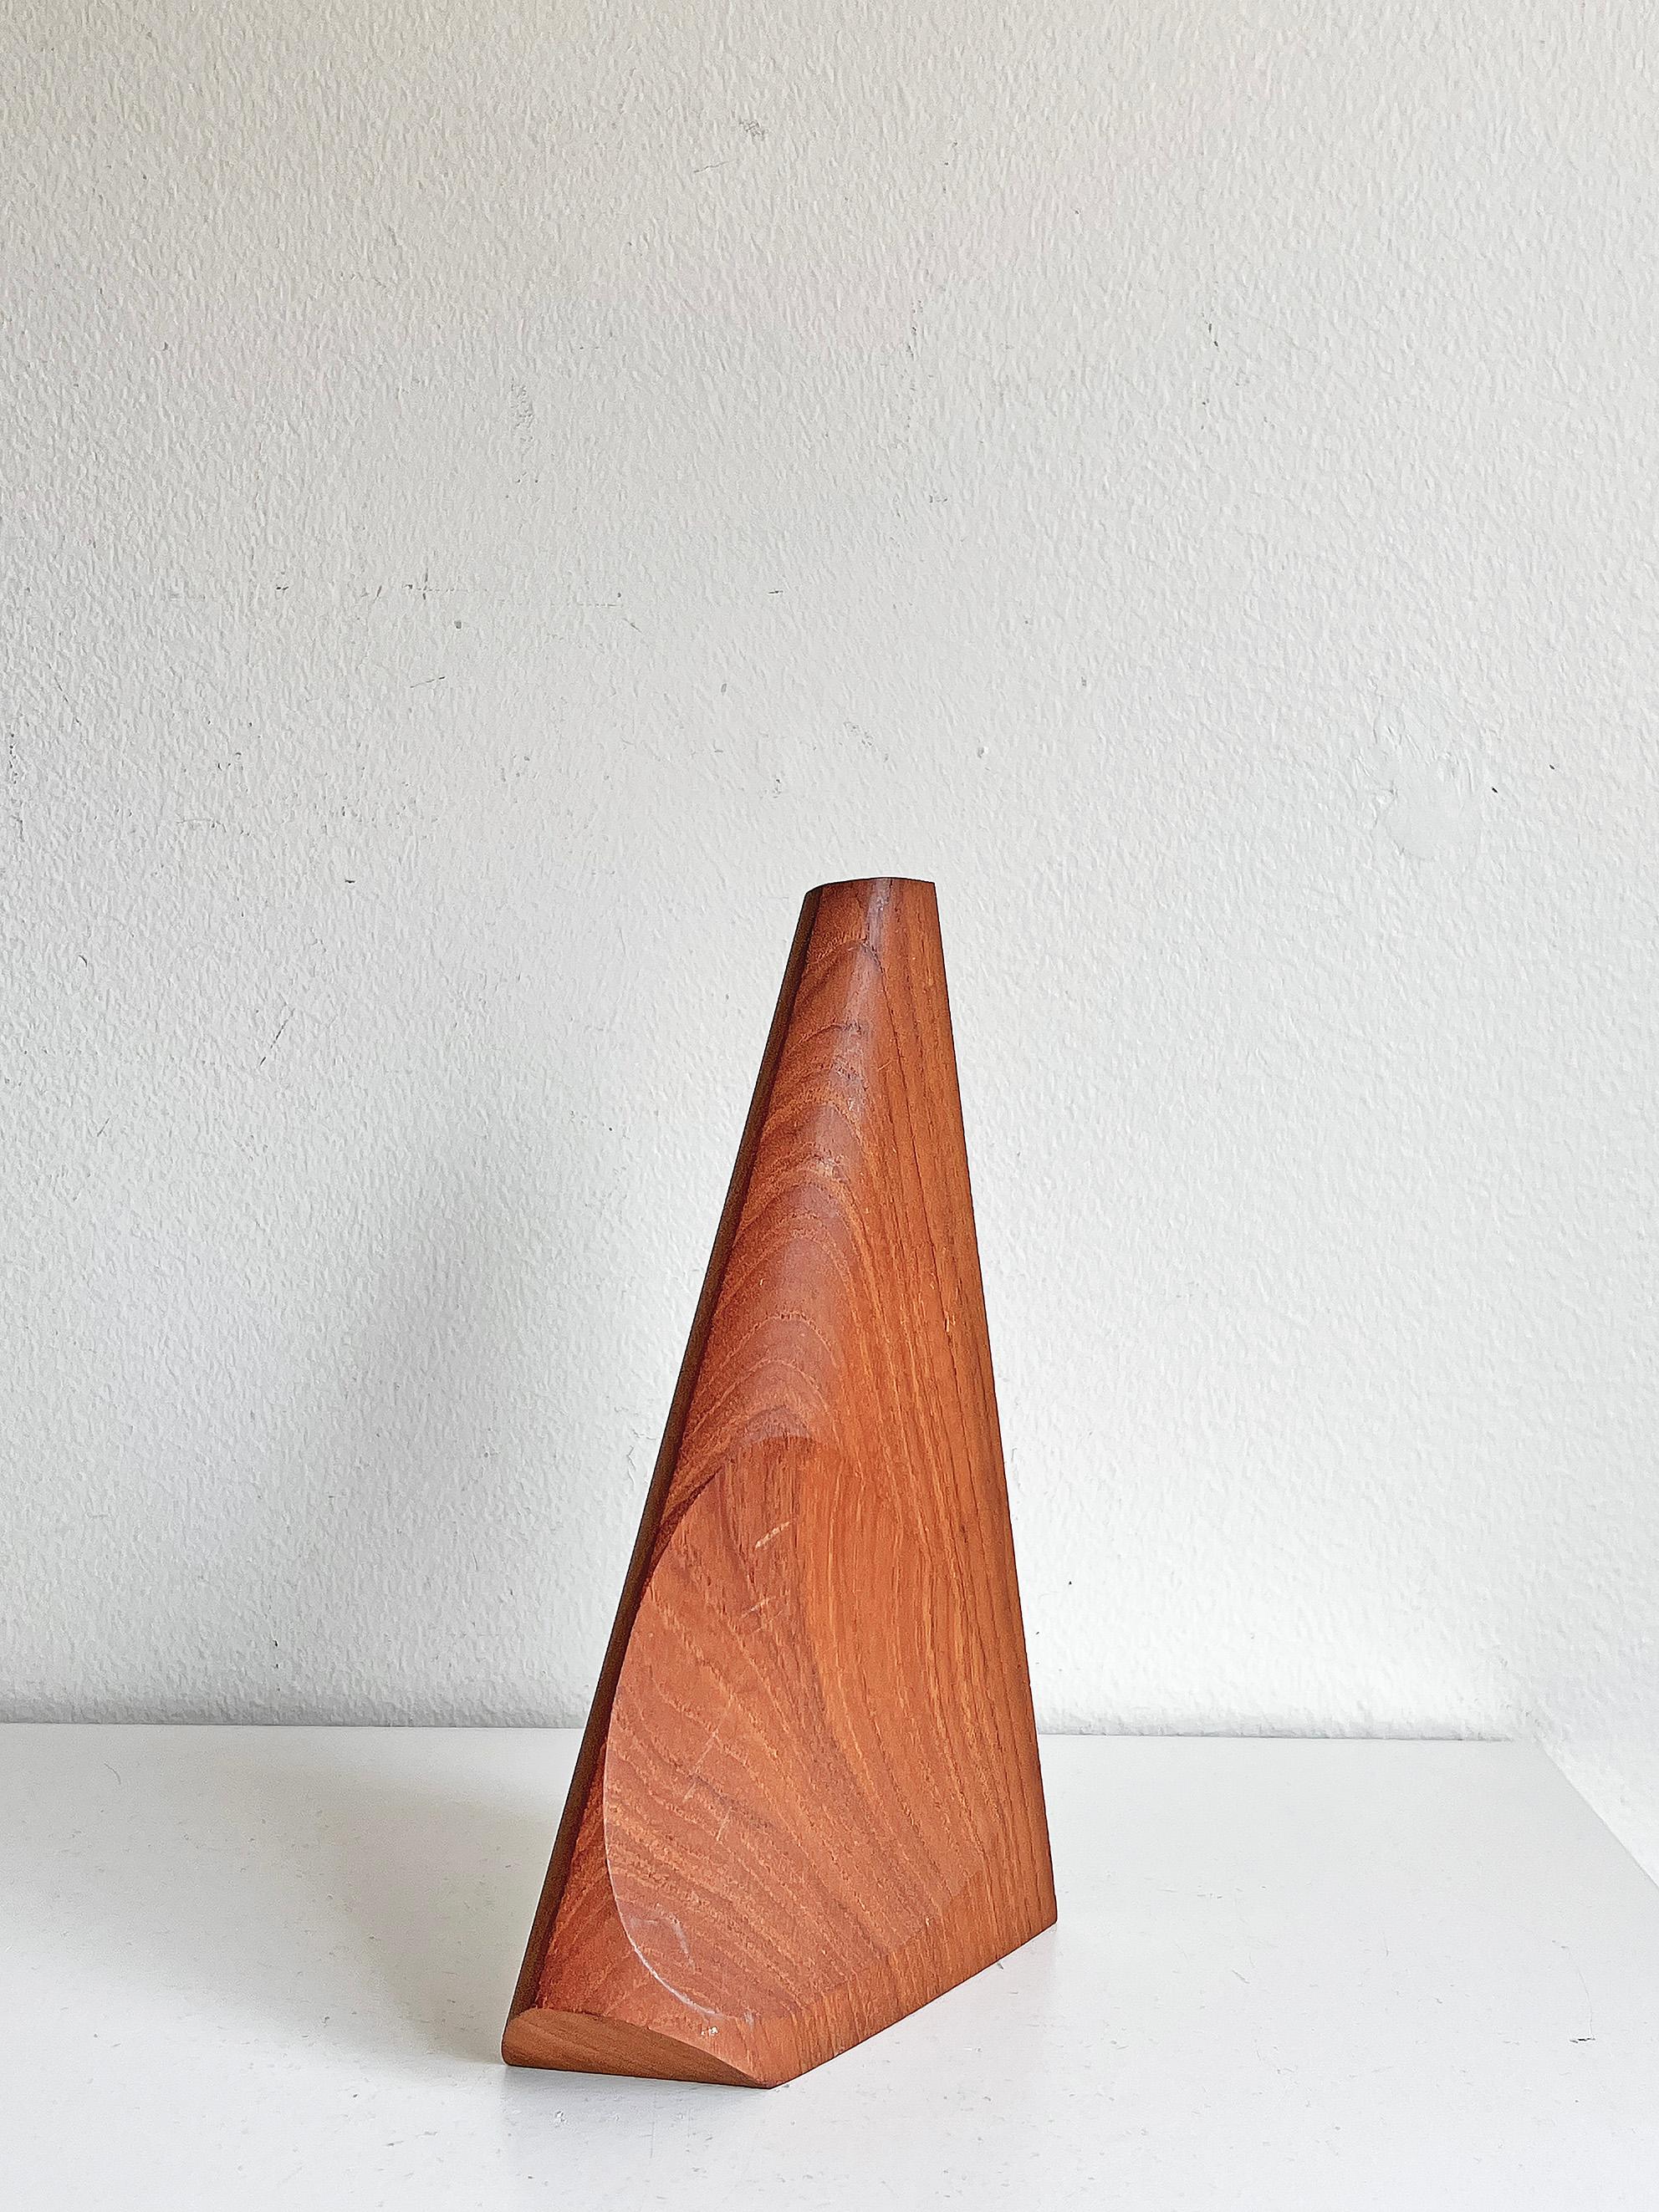 20th Century Swedish Modern Sculptural Vase in Teak For Sale